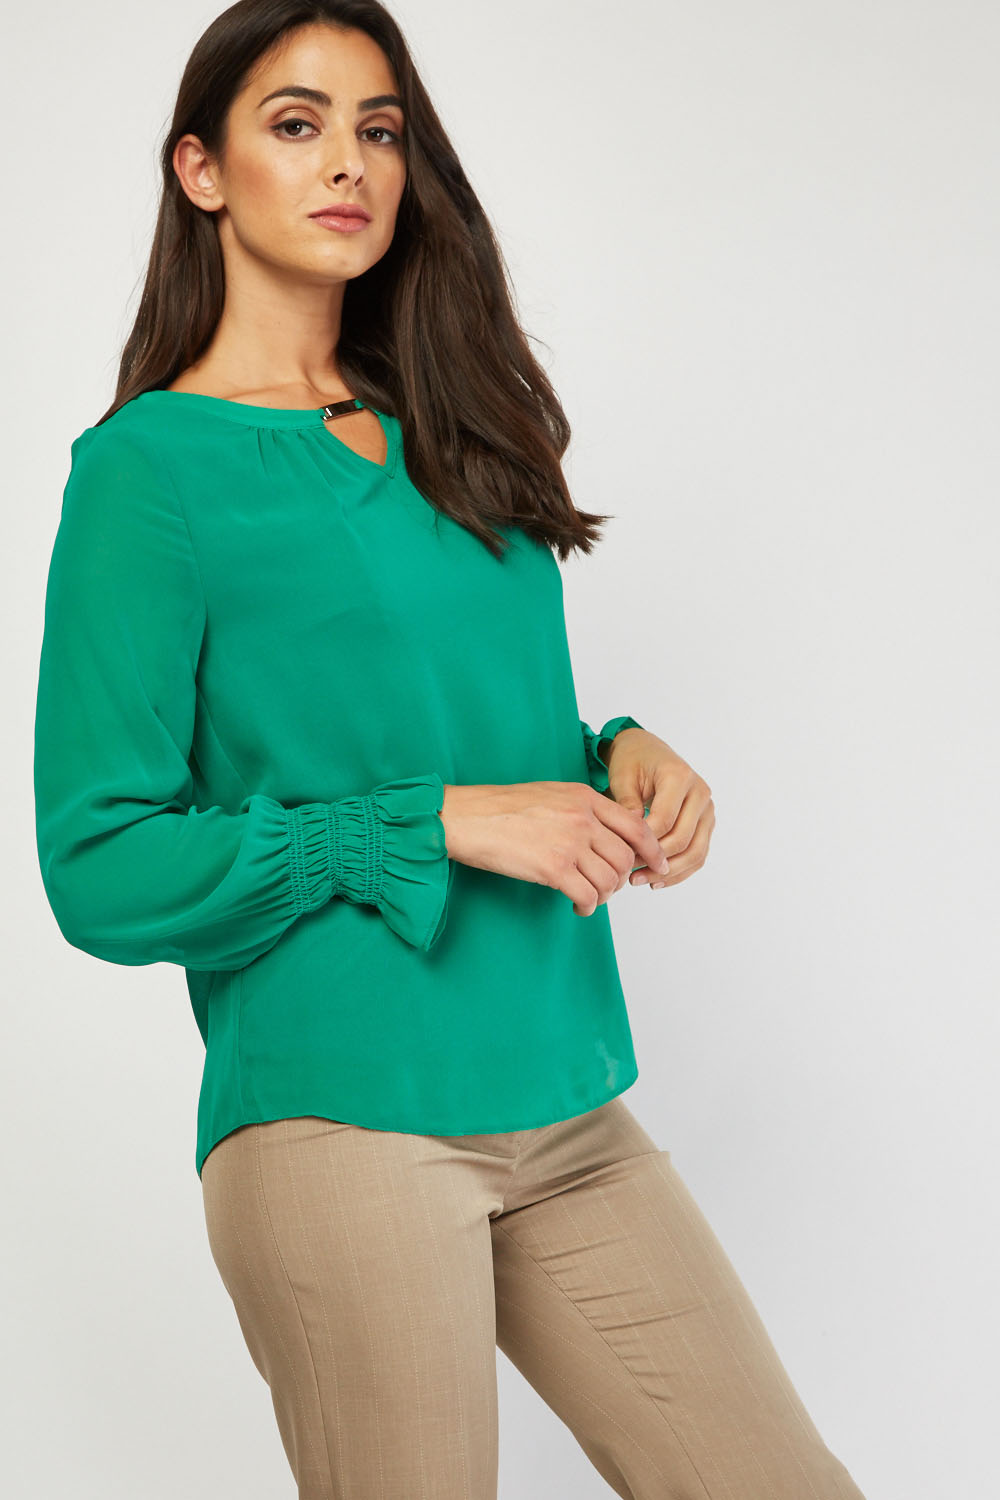 Shirred Sleeve Sheer Green Blouse - Just $7